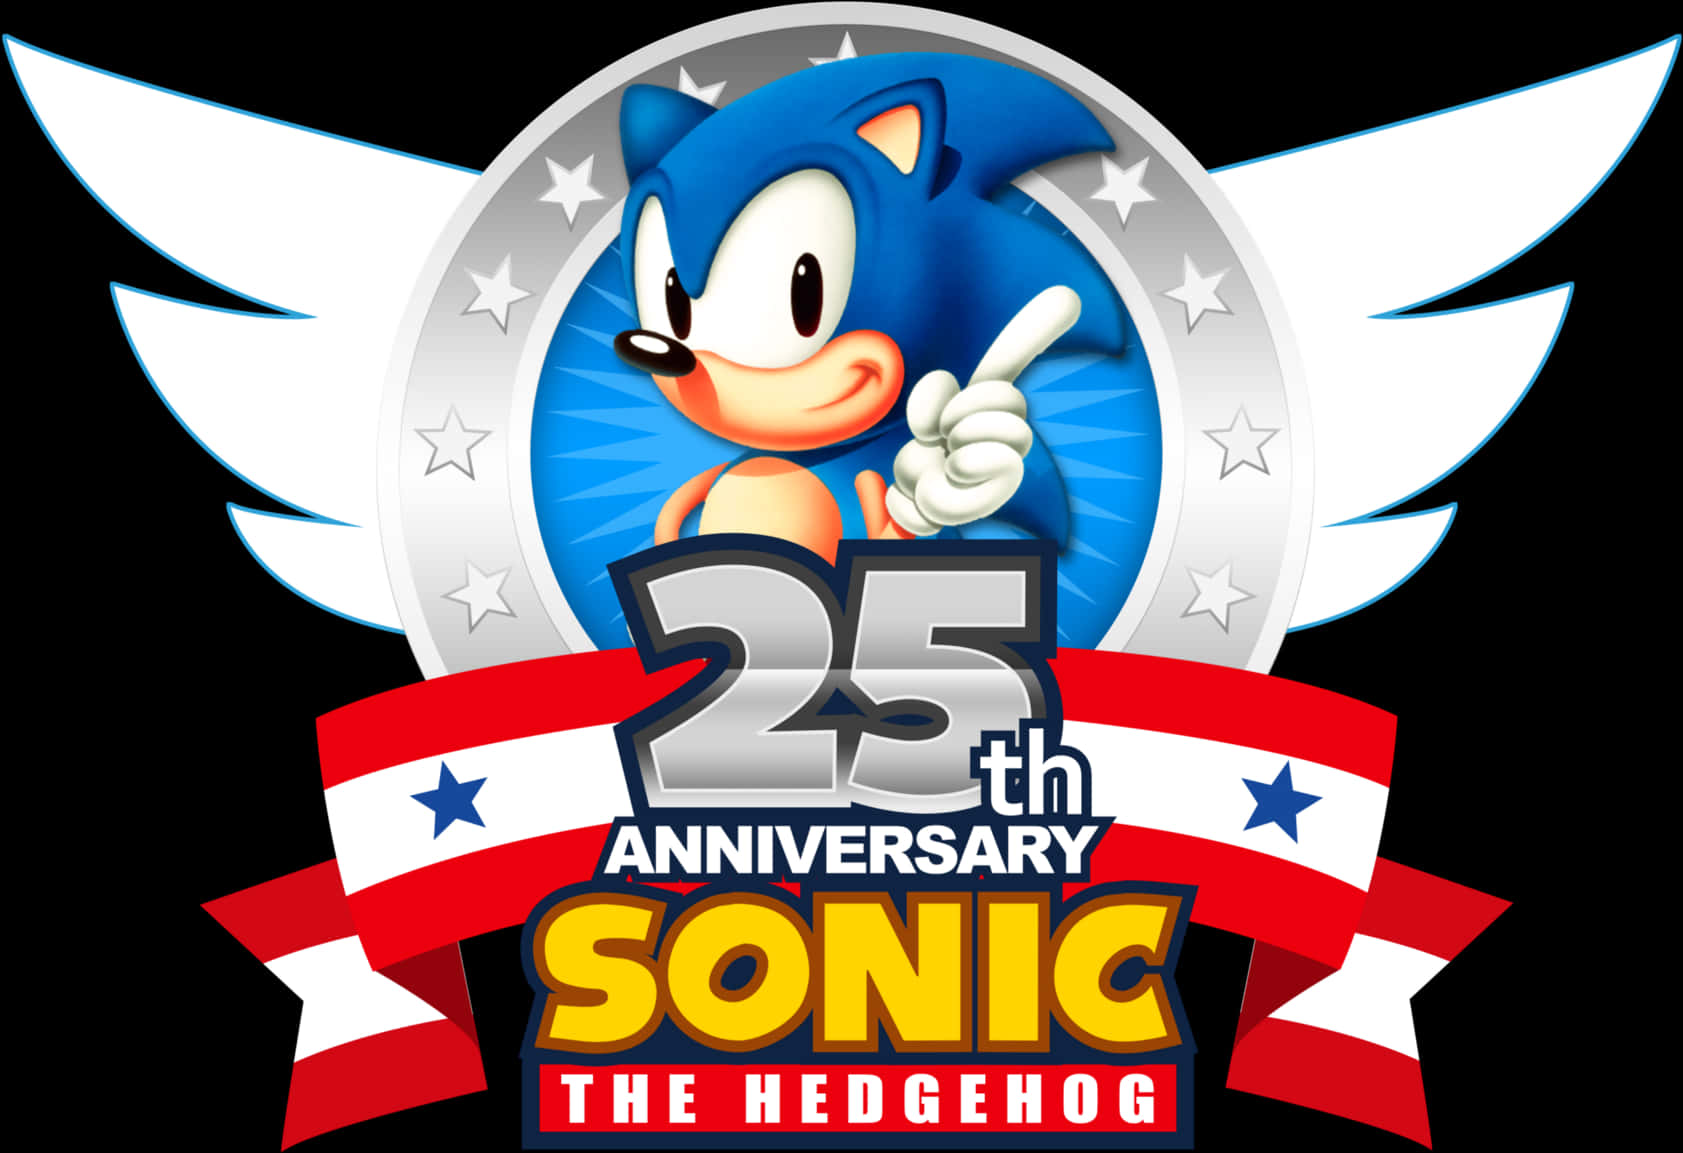 Sonic25th Anniversary Logo